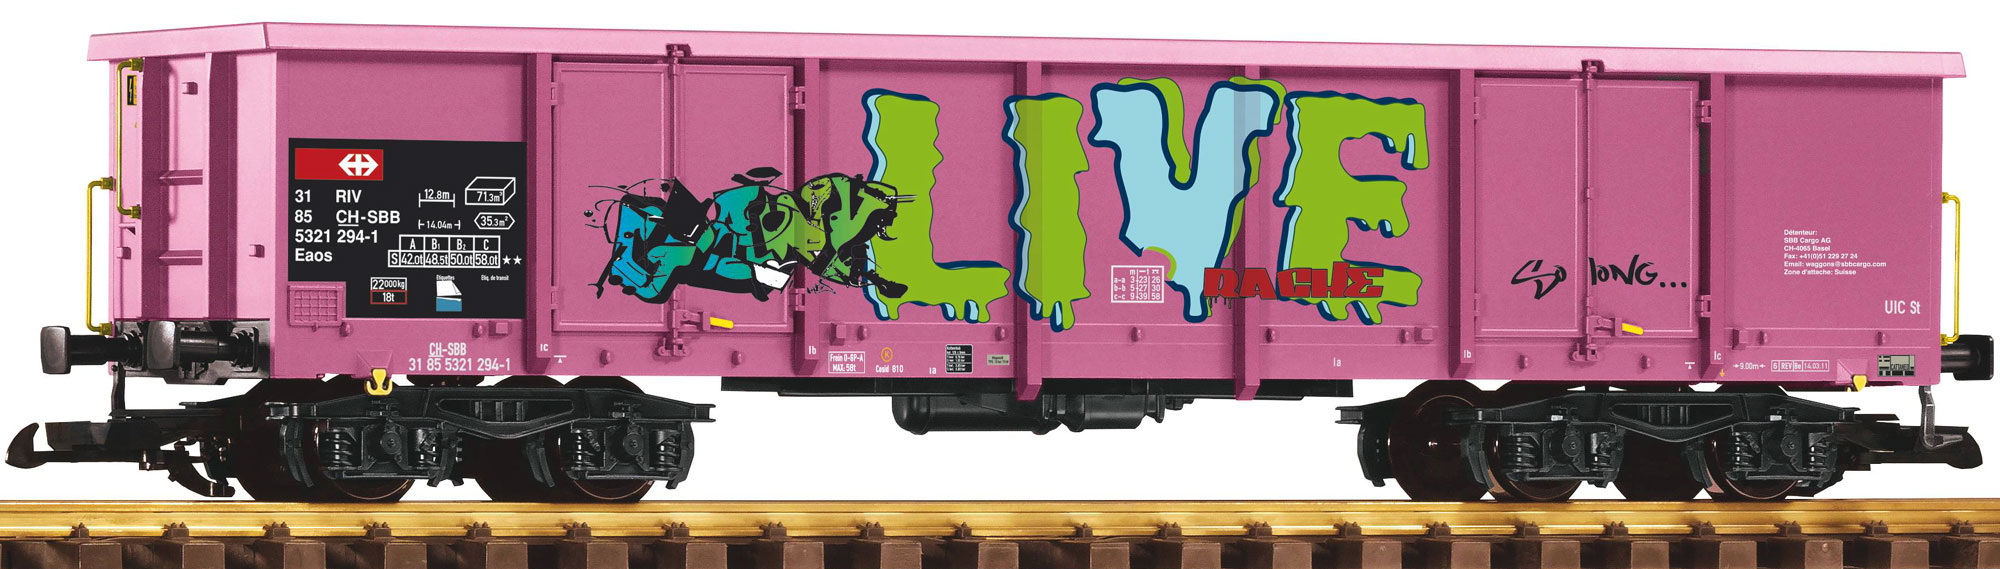 IIm G 37013 SBB Cargo offener Güterwagen Eaos pink Graffiti_Piko_12-22